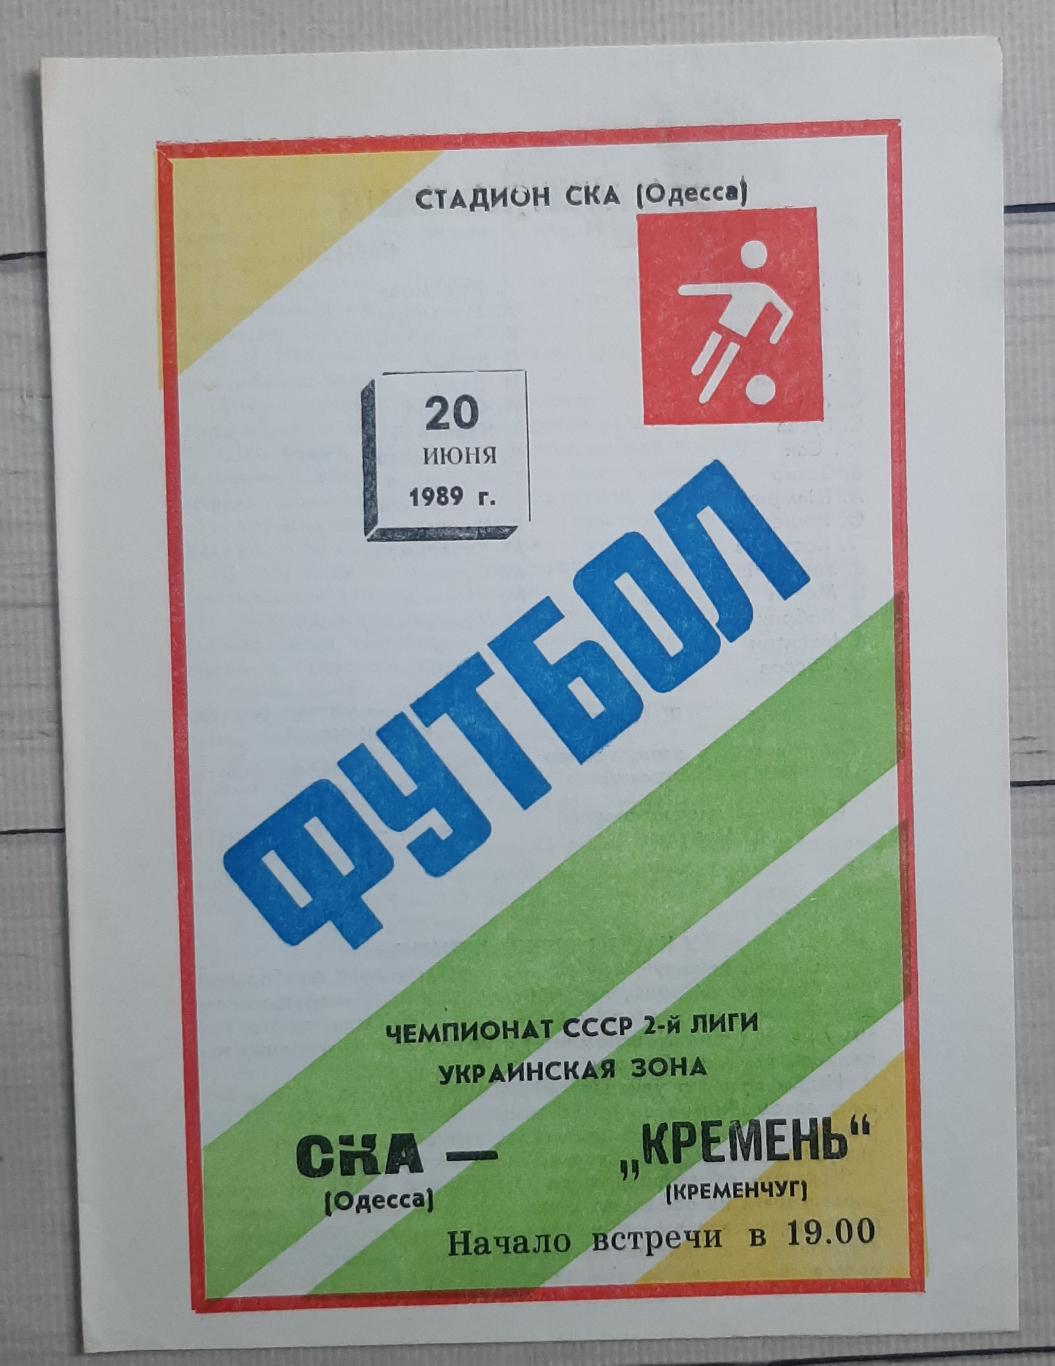 СКА Одеса - Кремінь Кременчук 20.06.1989